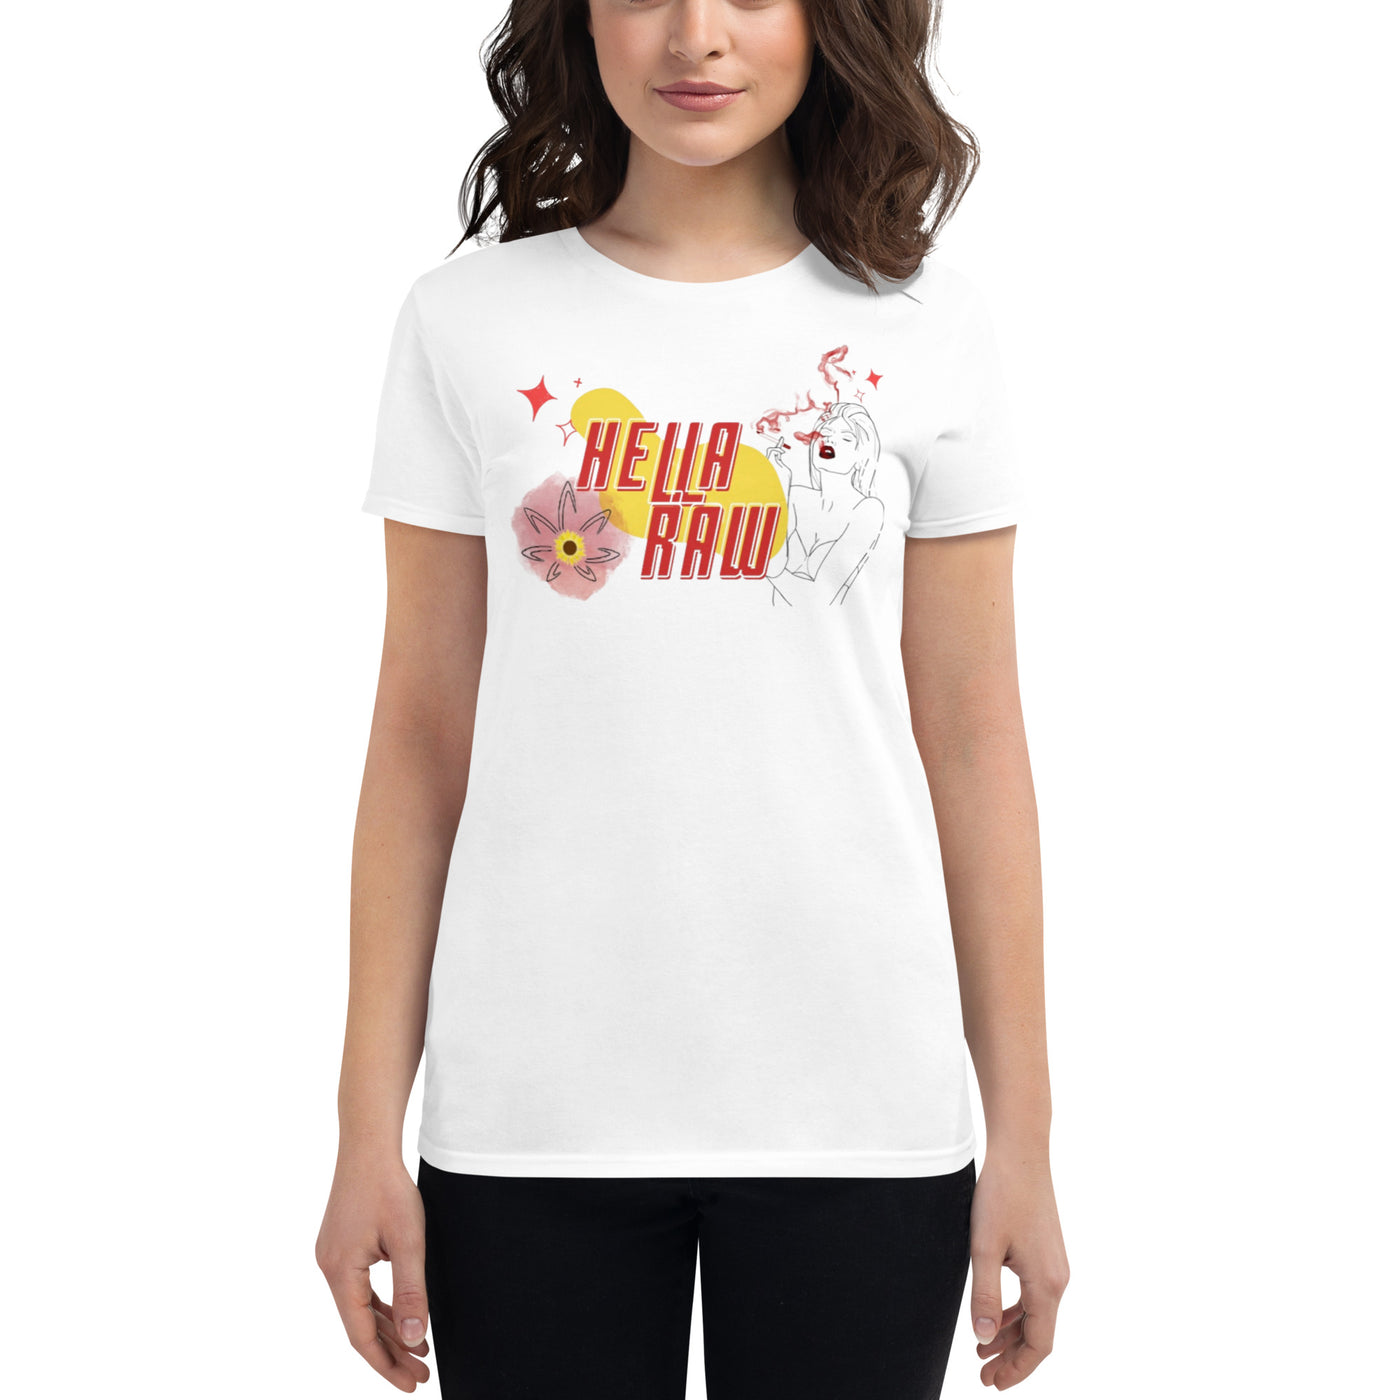 Hella Raw Women's short sleeve t-shirt